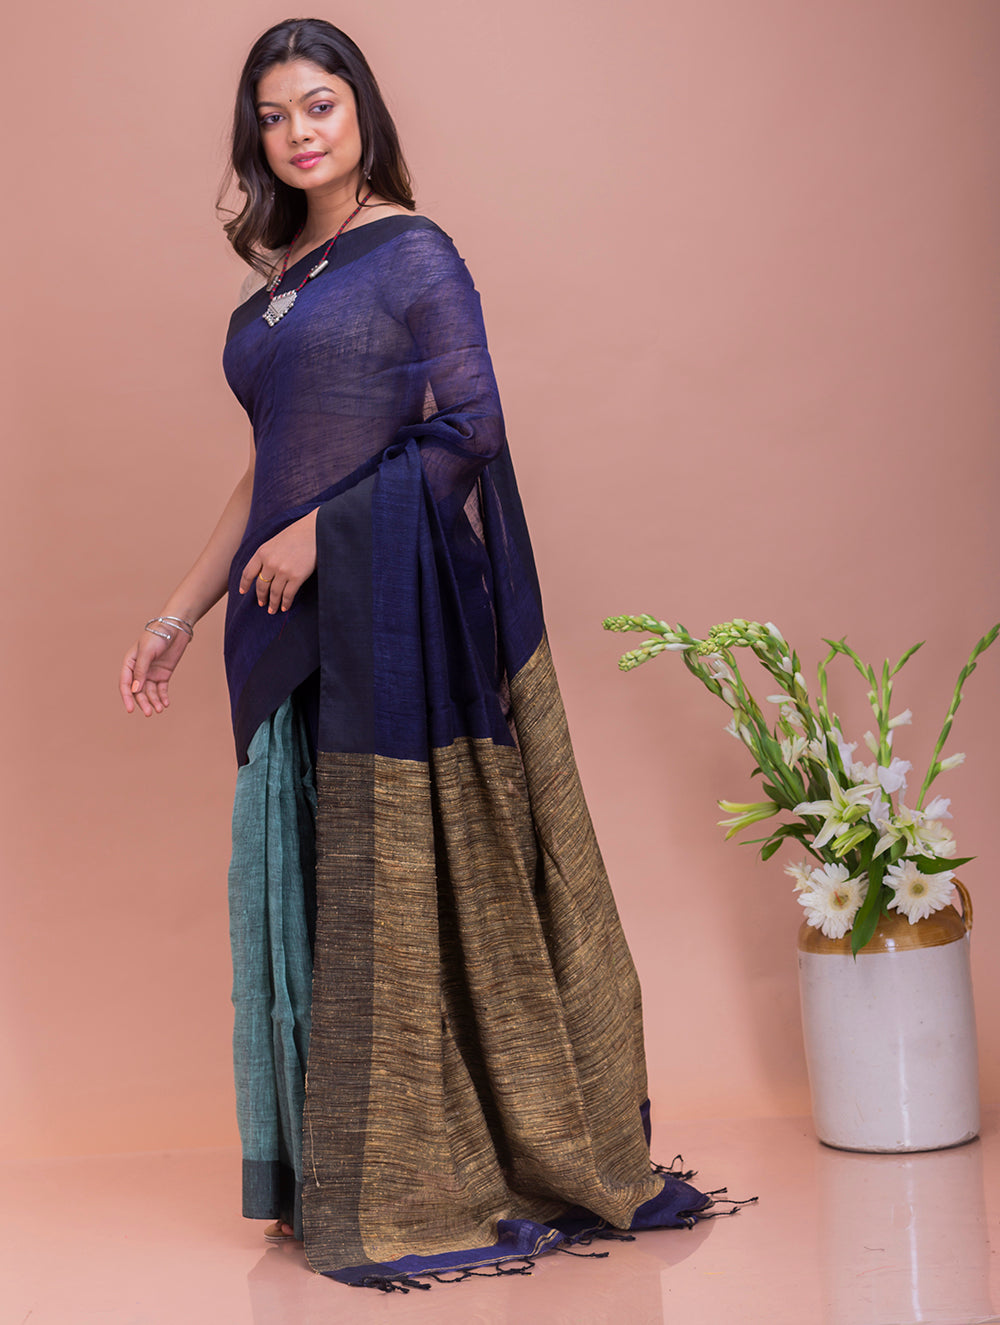 Load image into Gallery viewer, Soft Bengal Handwoven Linen Saree - Aqua Green &amp; Deep Blue